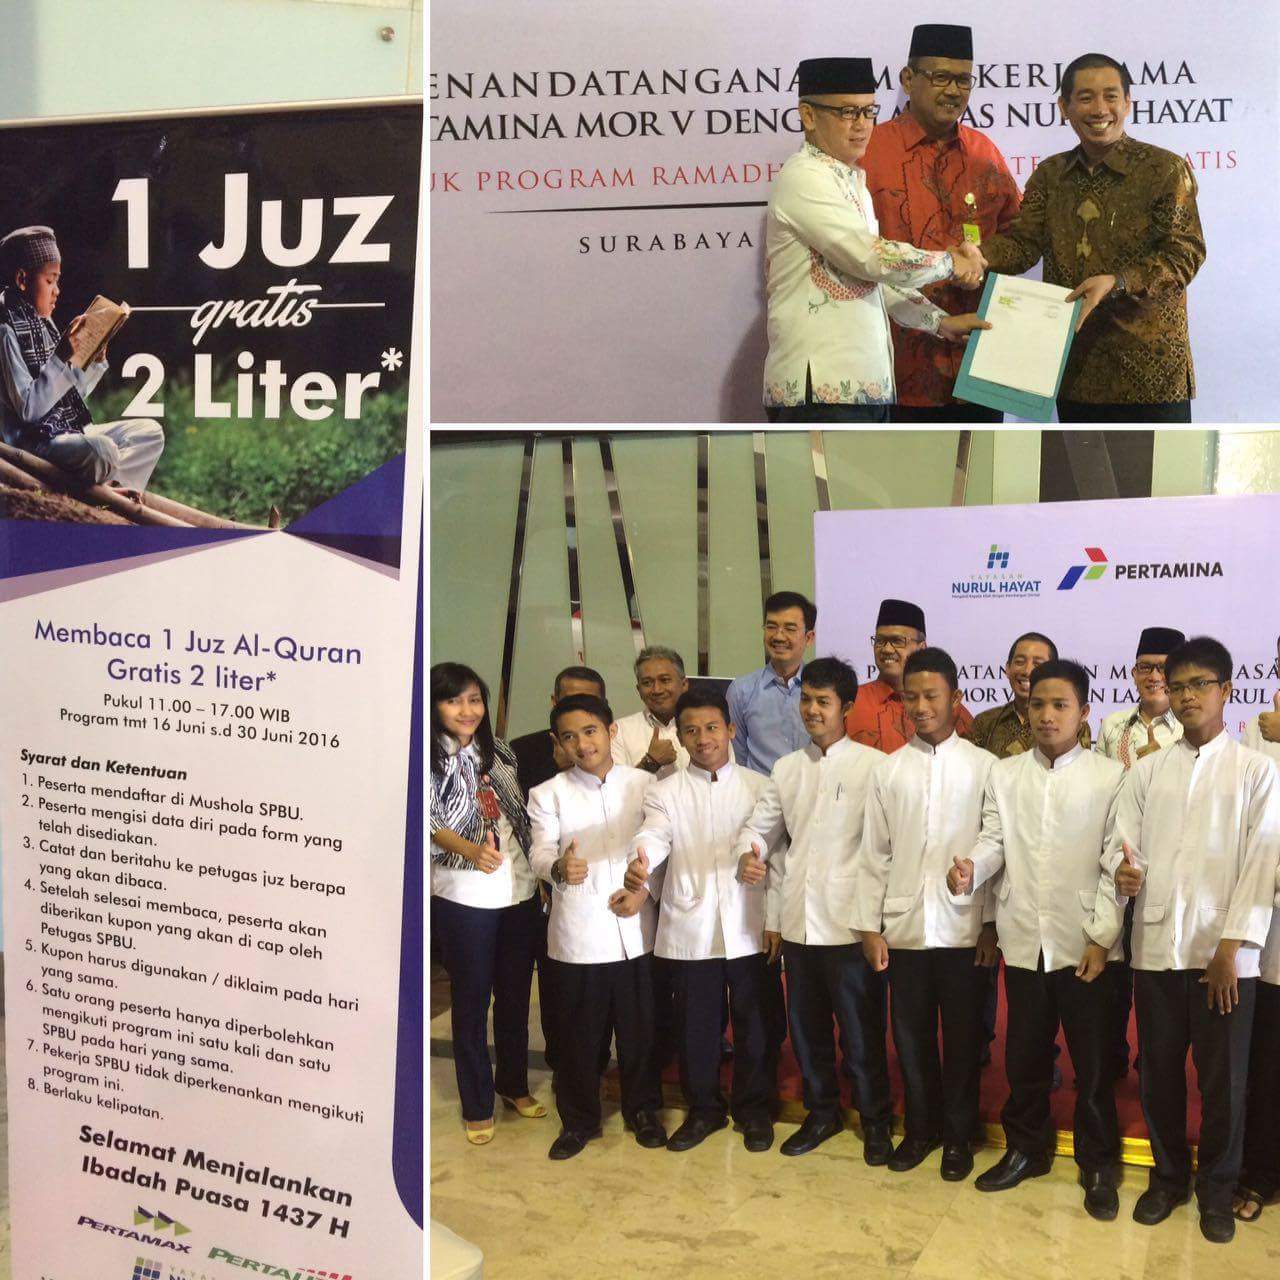 Program 1 juz 2 liter di Jawa Timur tahun 2016